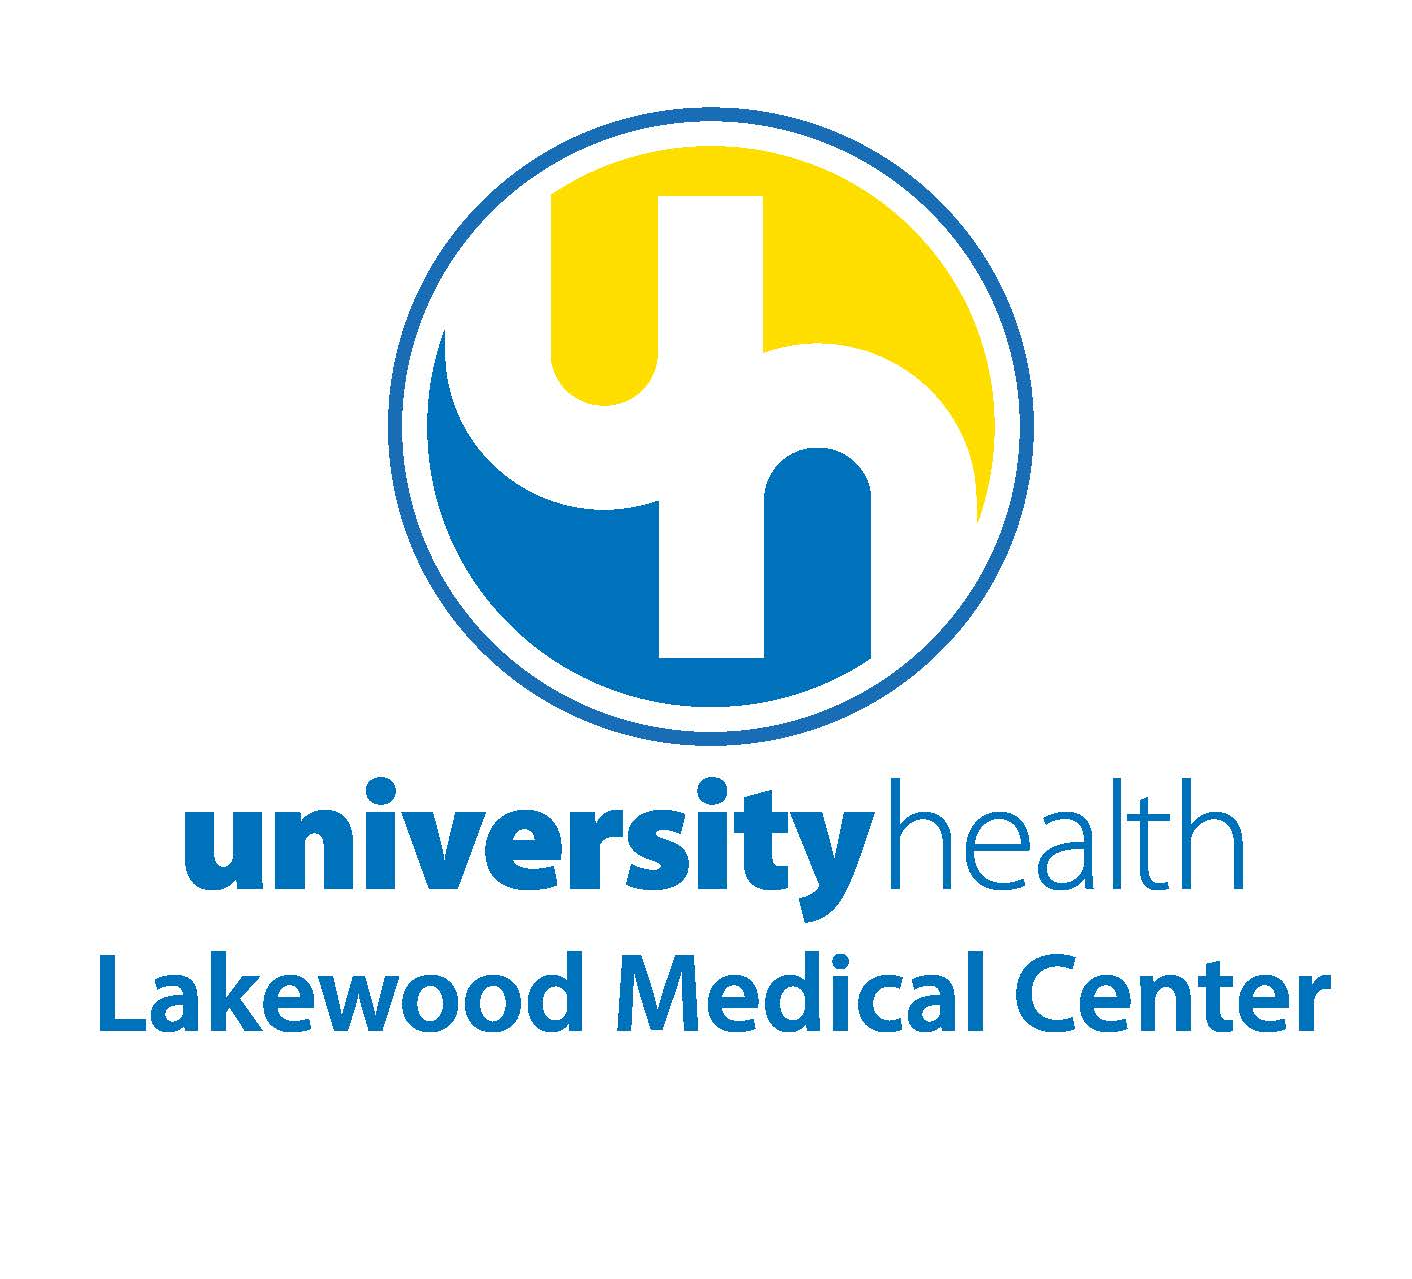 University Health lakewood medical center